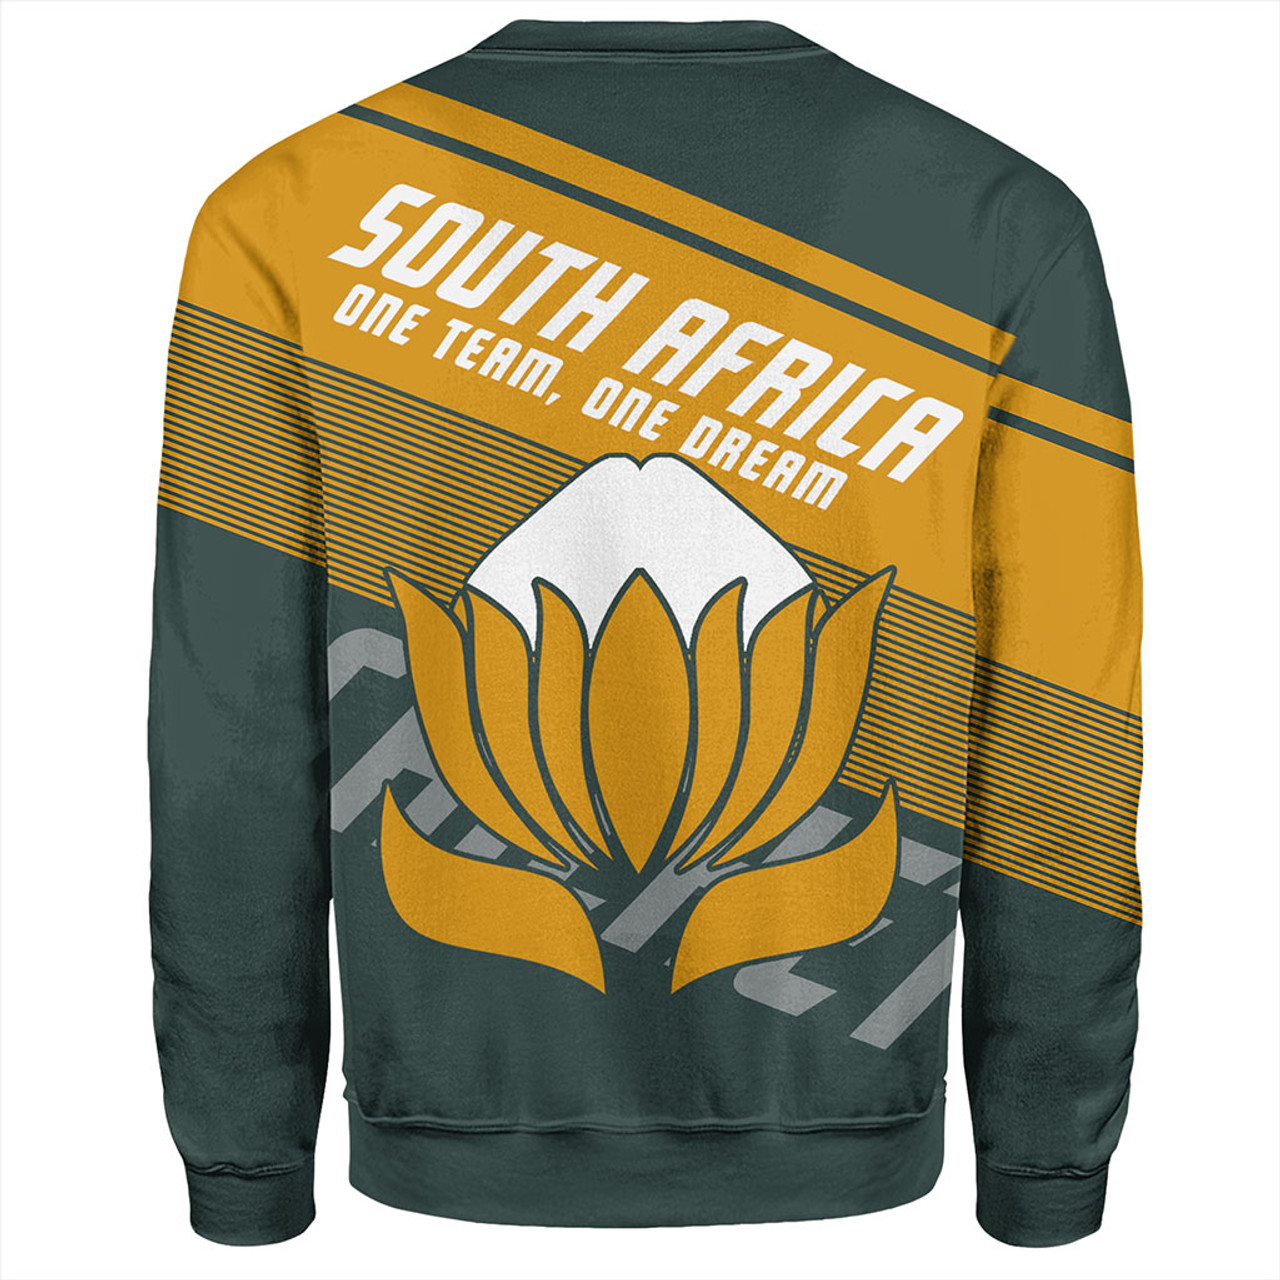 South Africa Sweatshirt Cricket Style